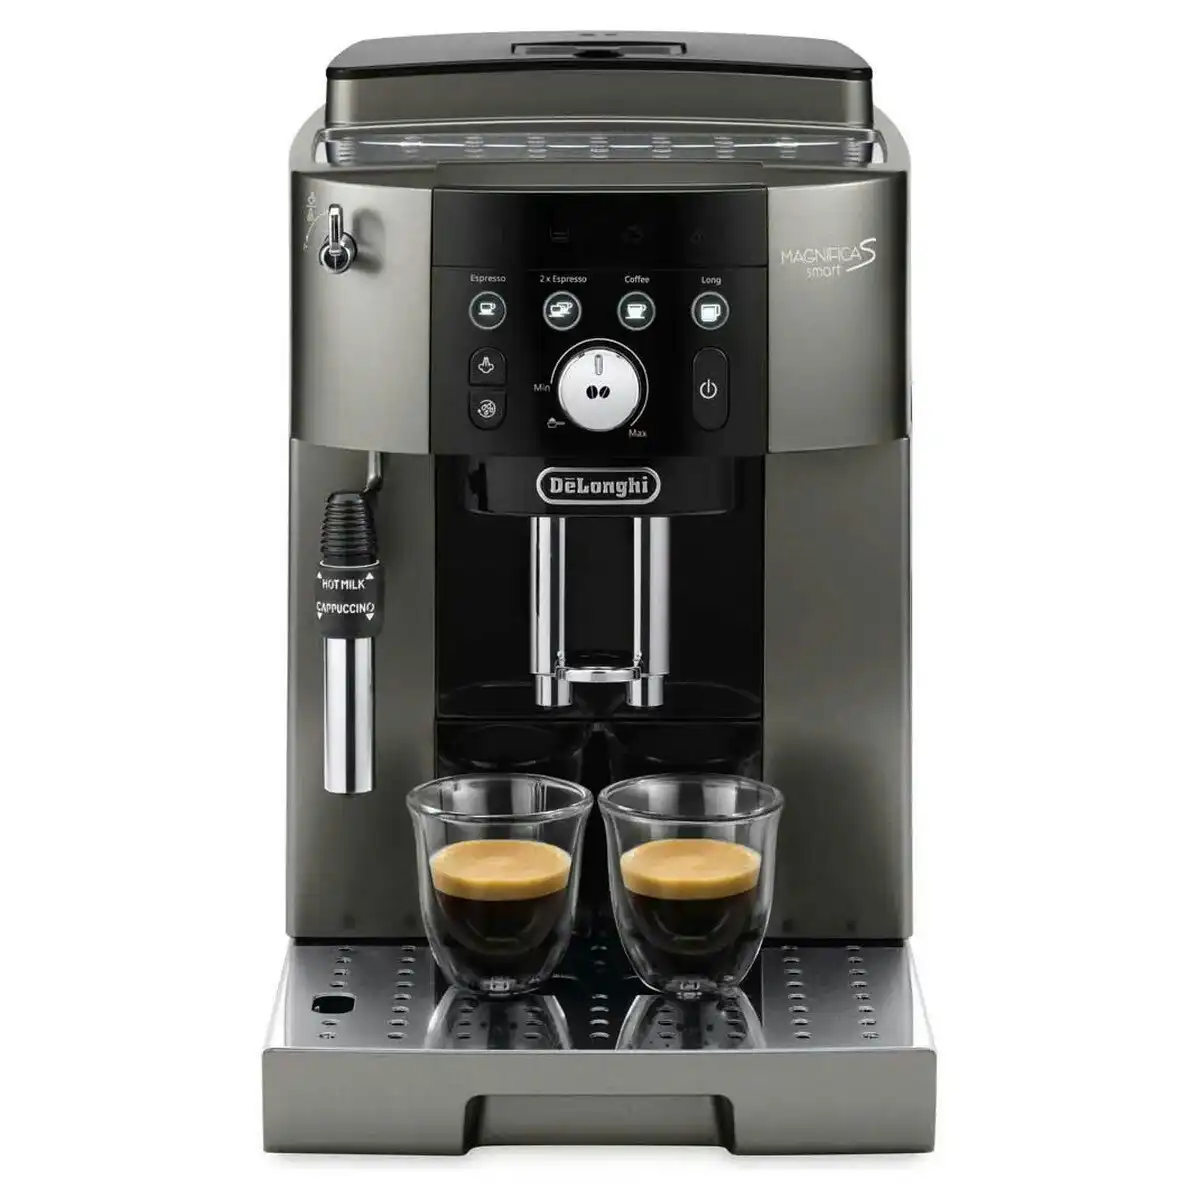 De'Longhi Magnifica S Smart Automatic Coffee Machine